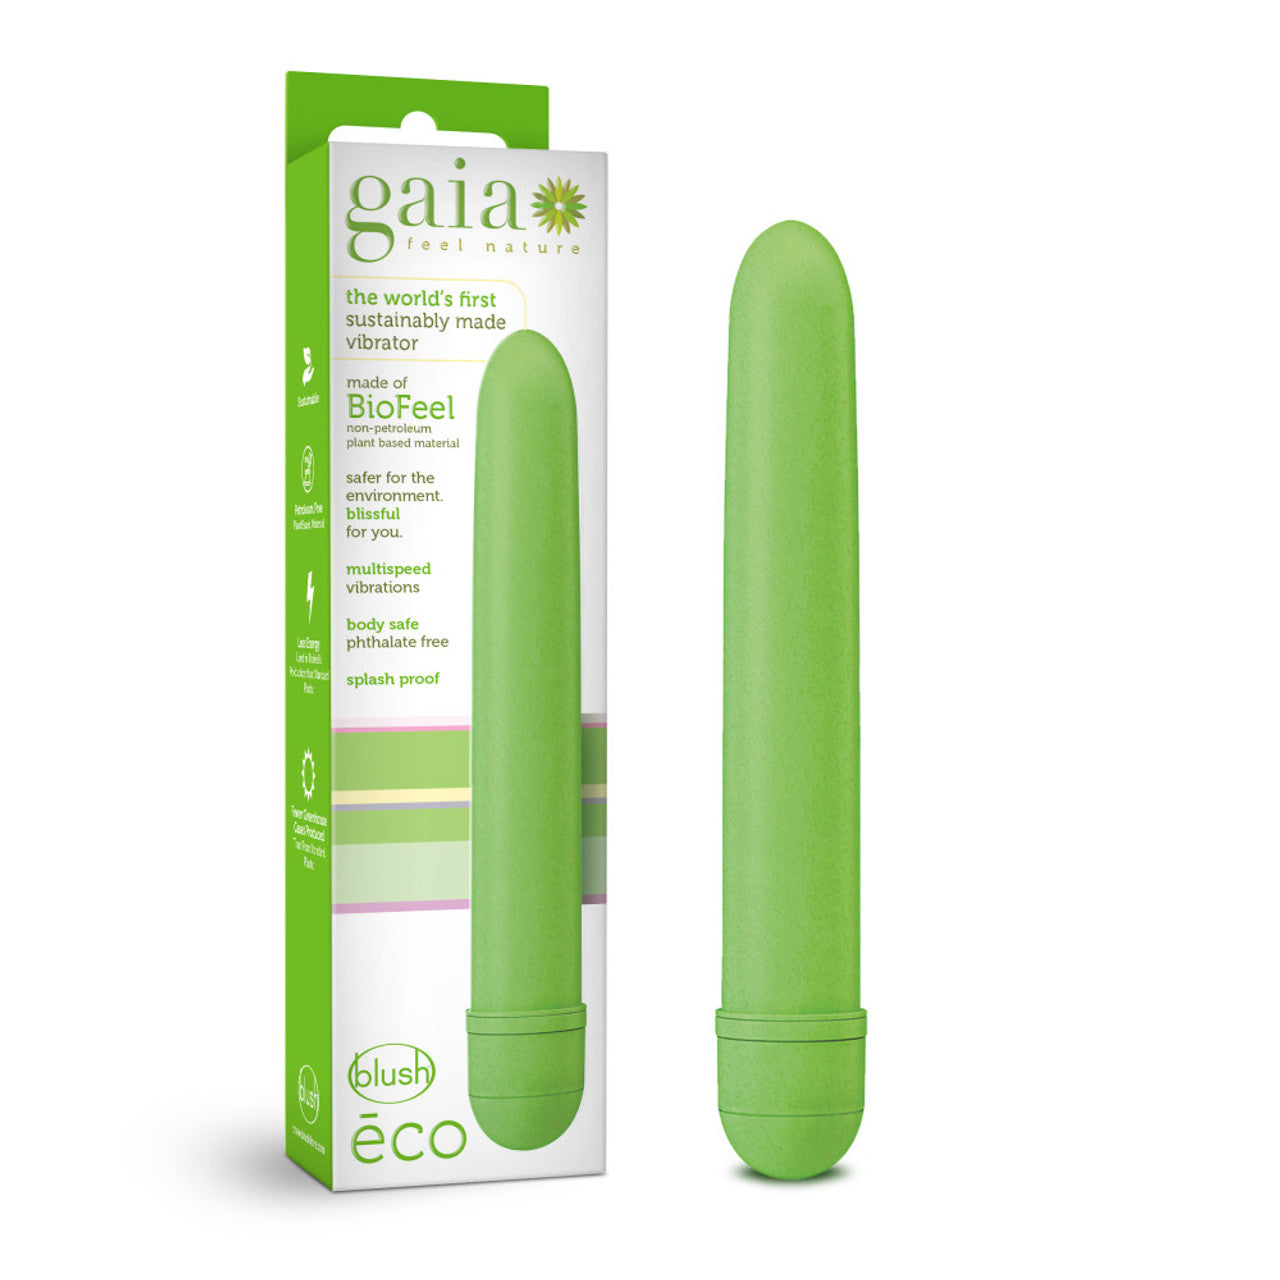 Gaia Eco Biadegradable Vibrator - Green - Thorn & Feather Sex Toy Canada